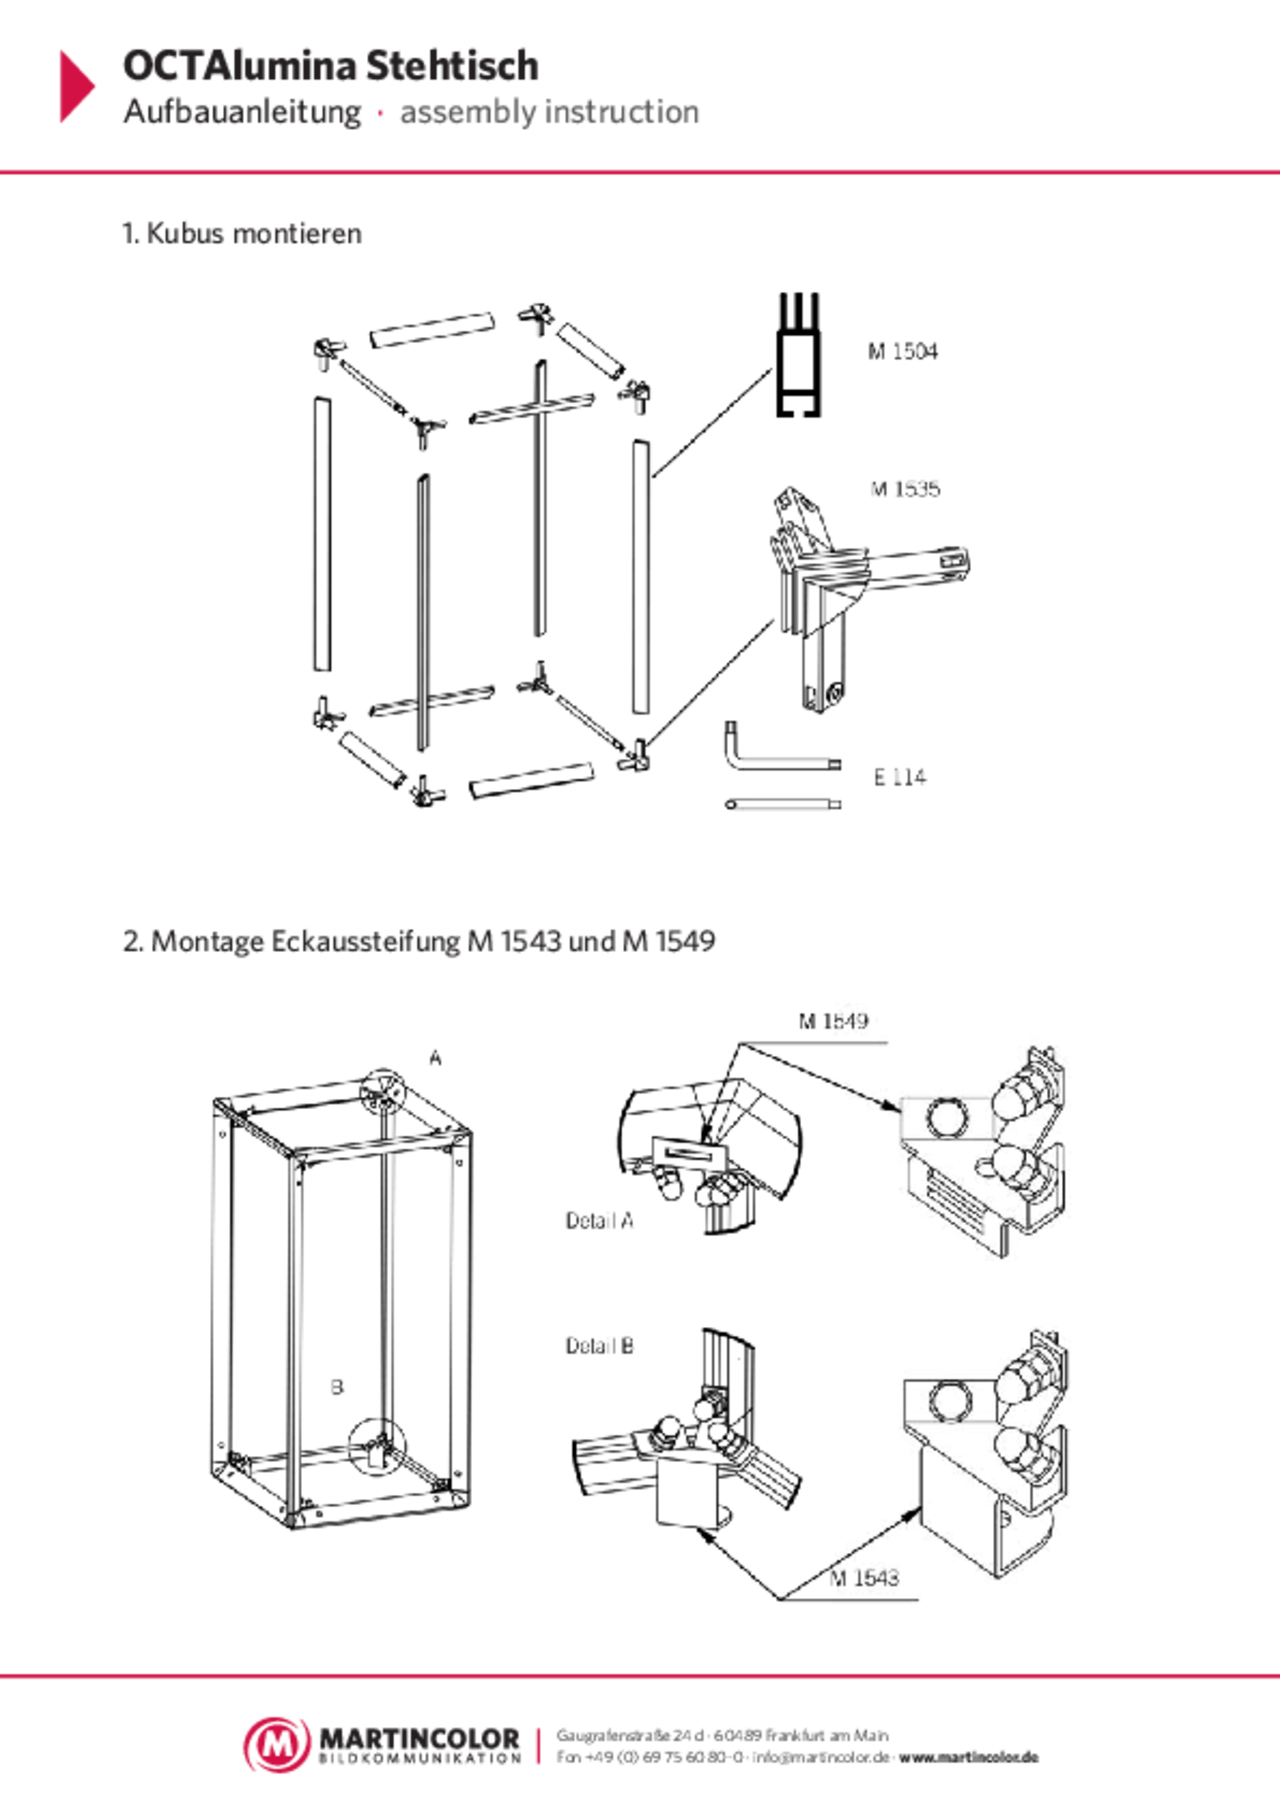 OCTAlumina standing table assembly instructions PDF